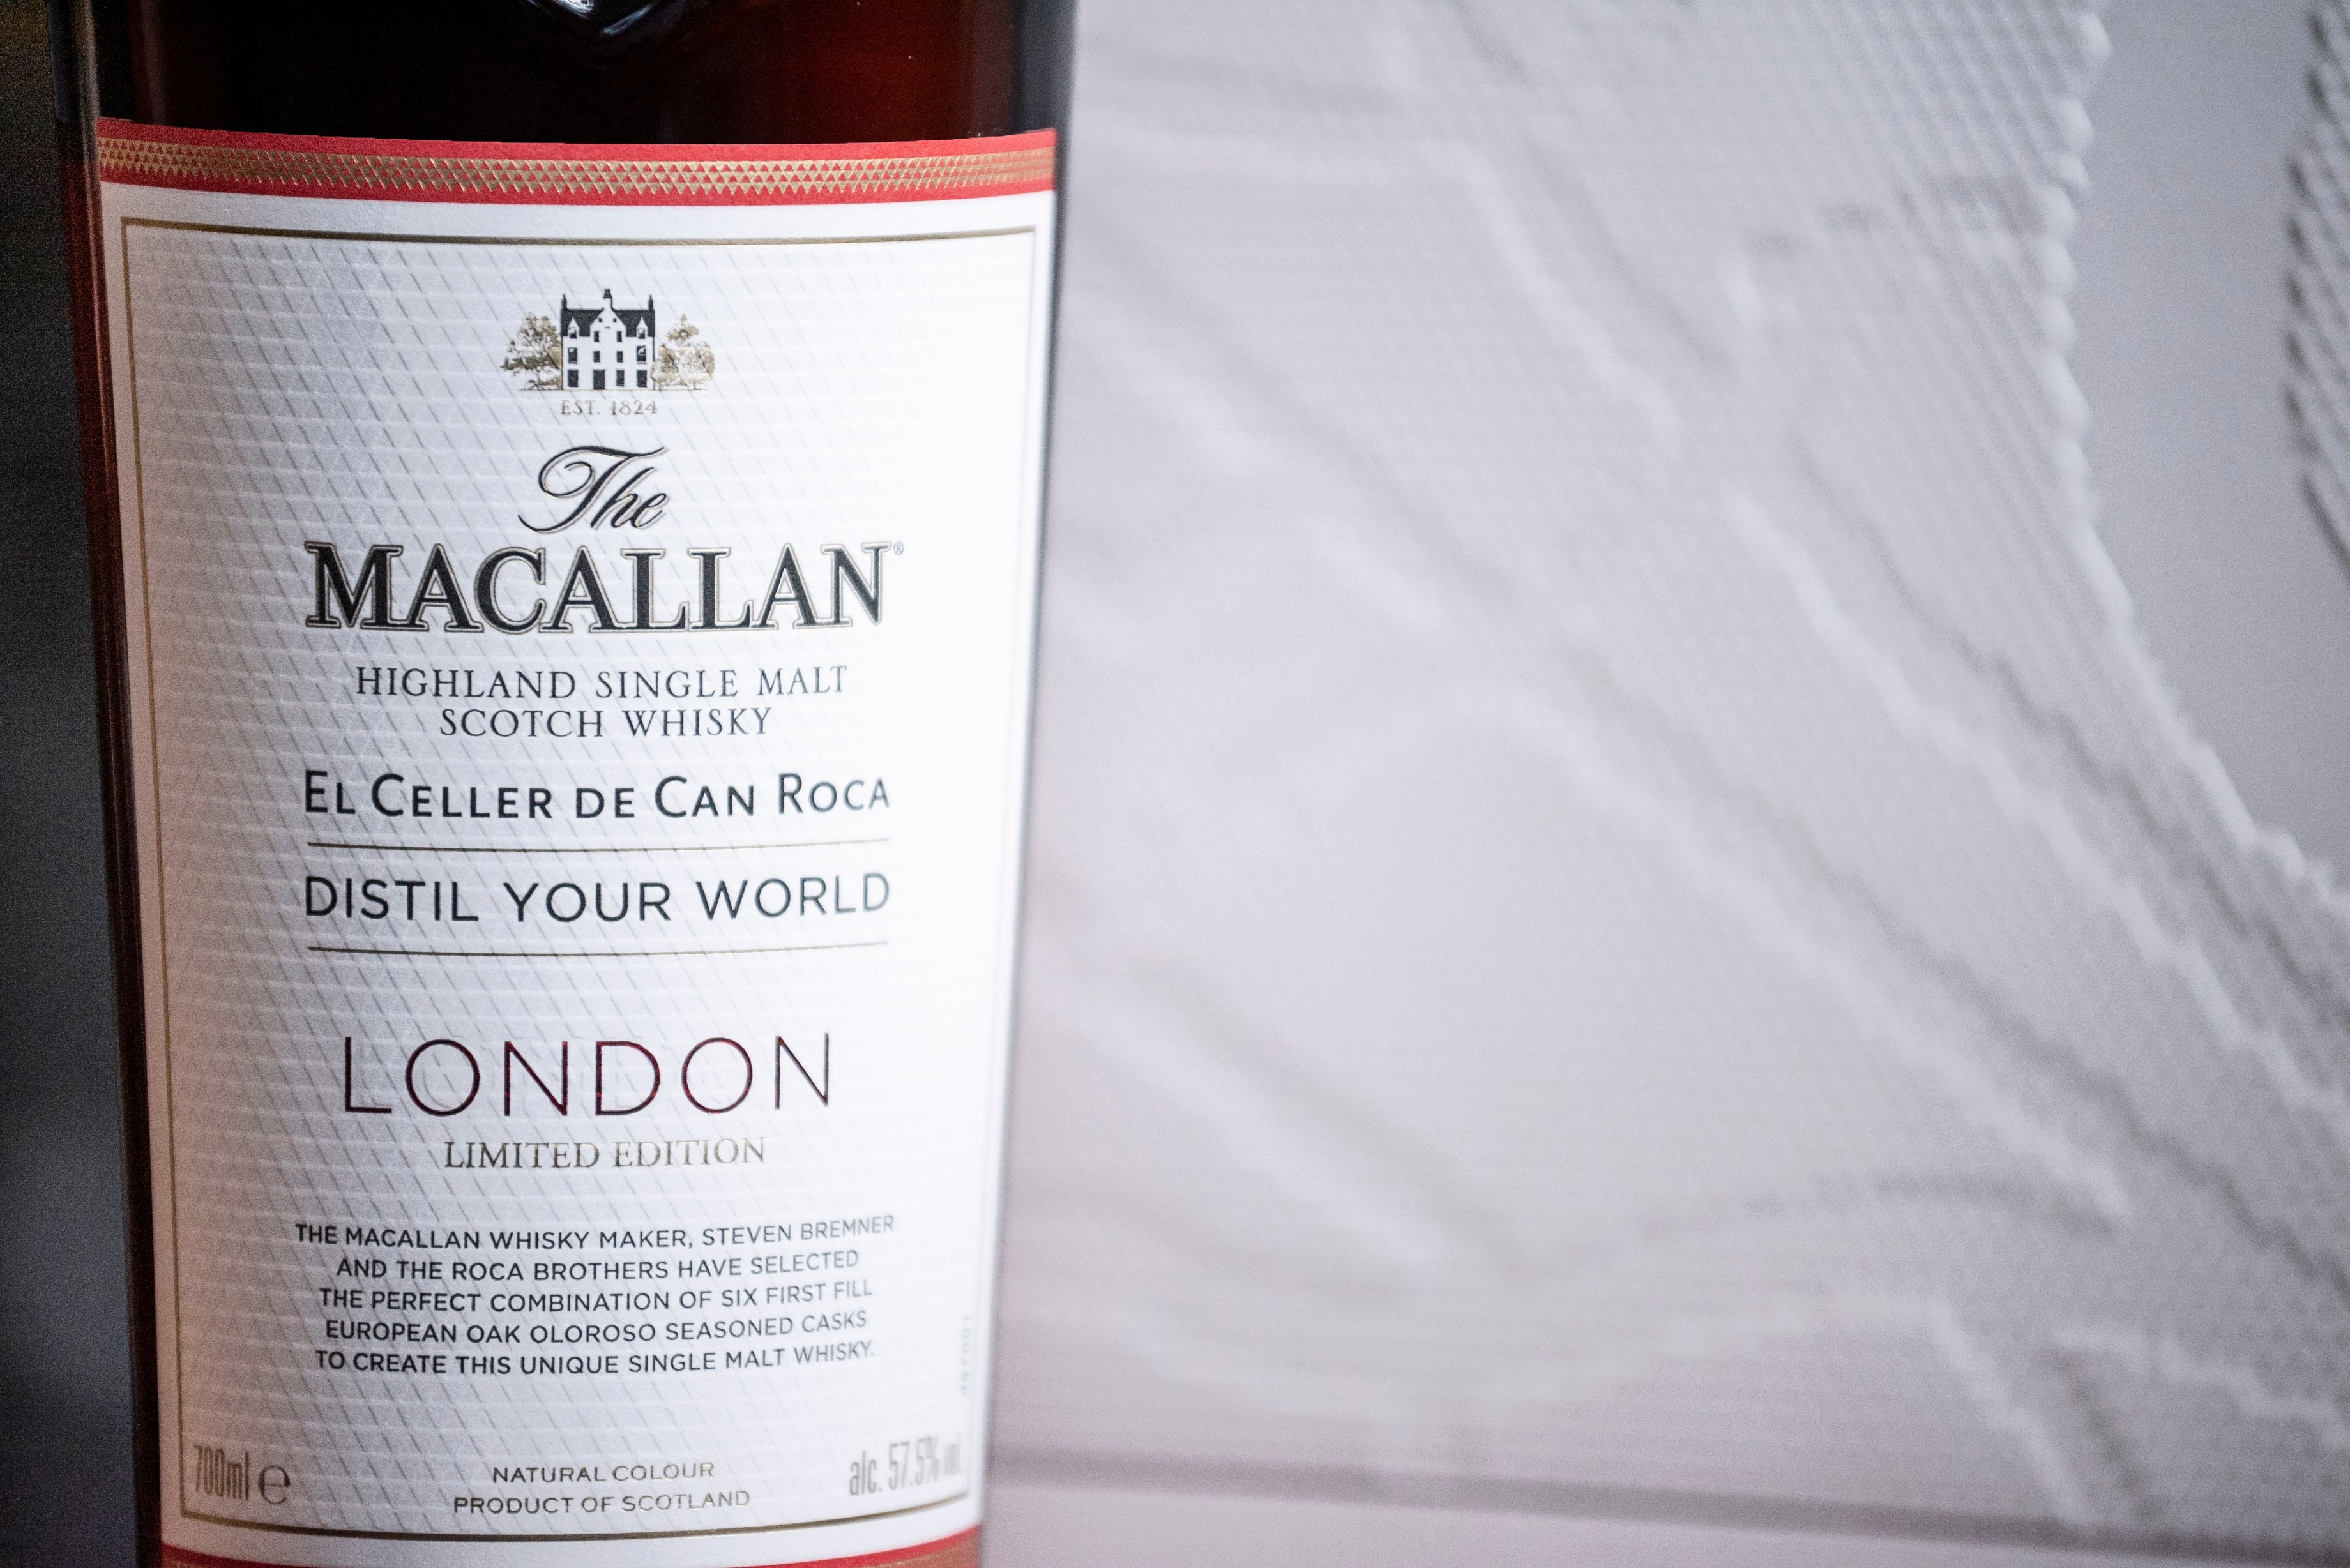 Macallan Distil Your World - London